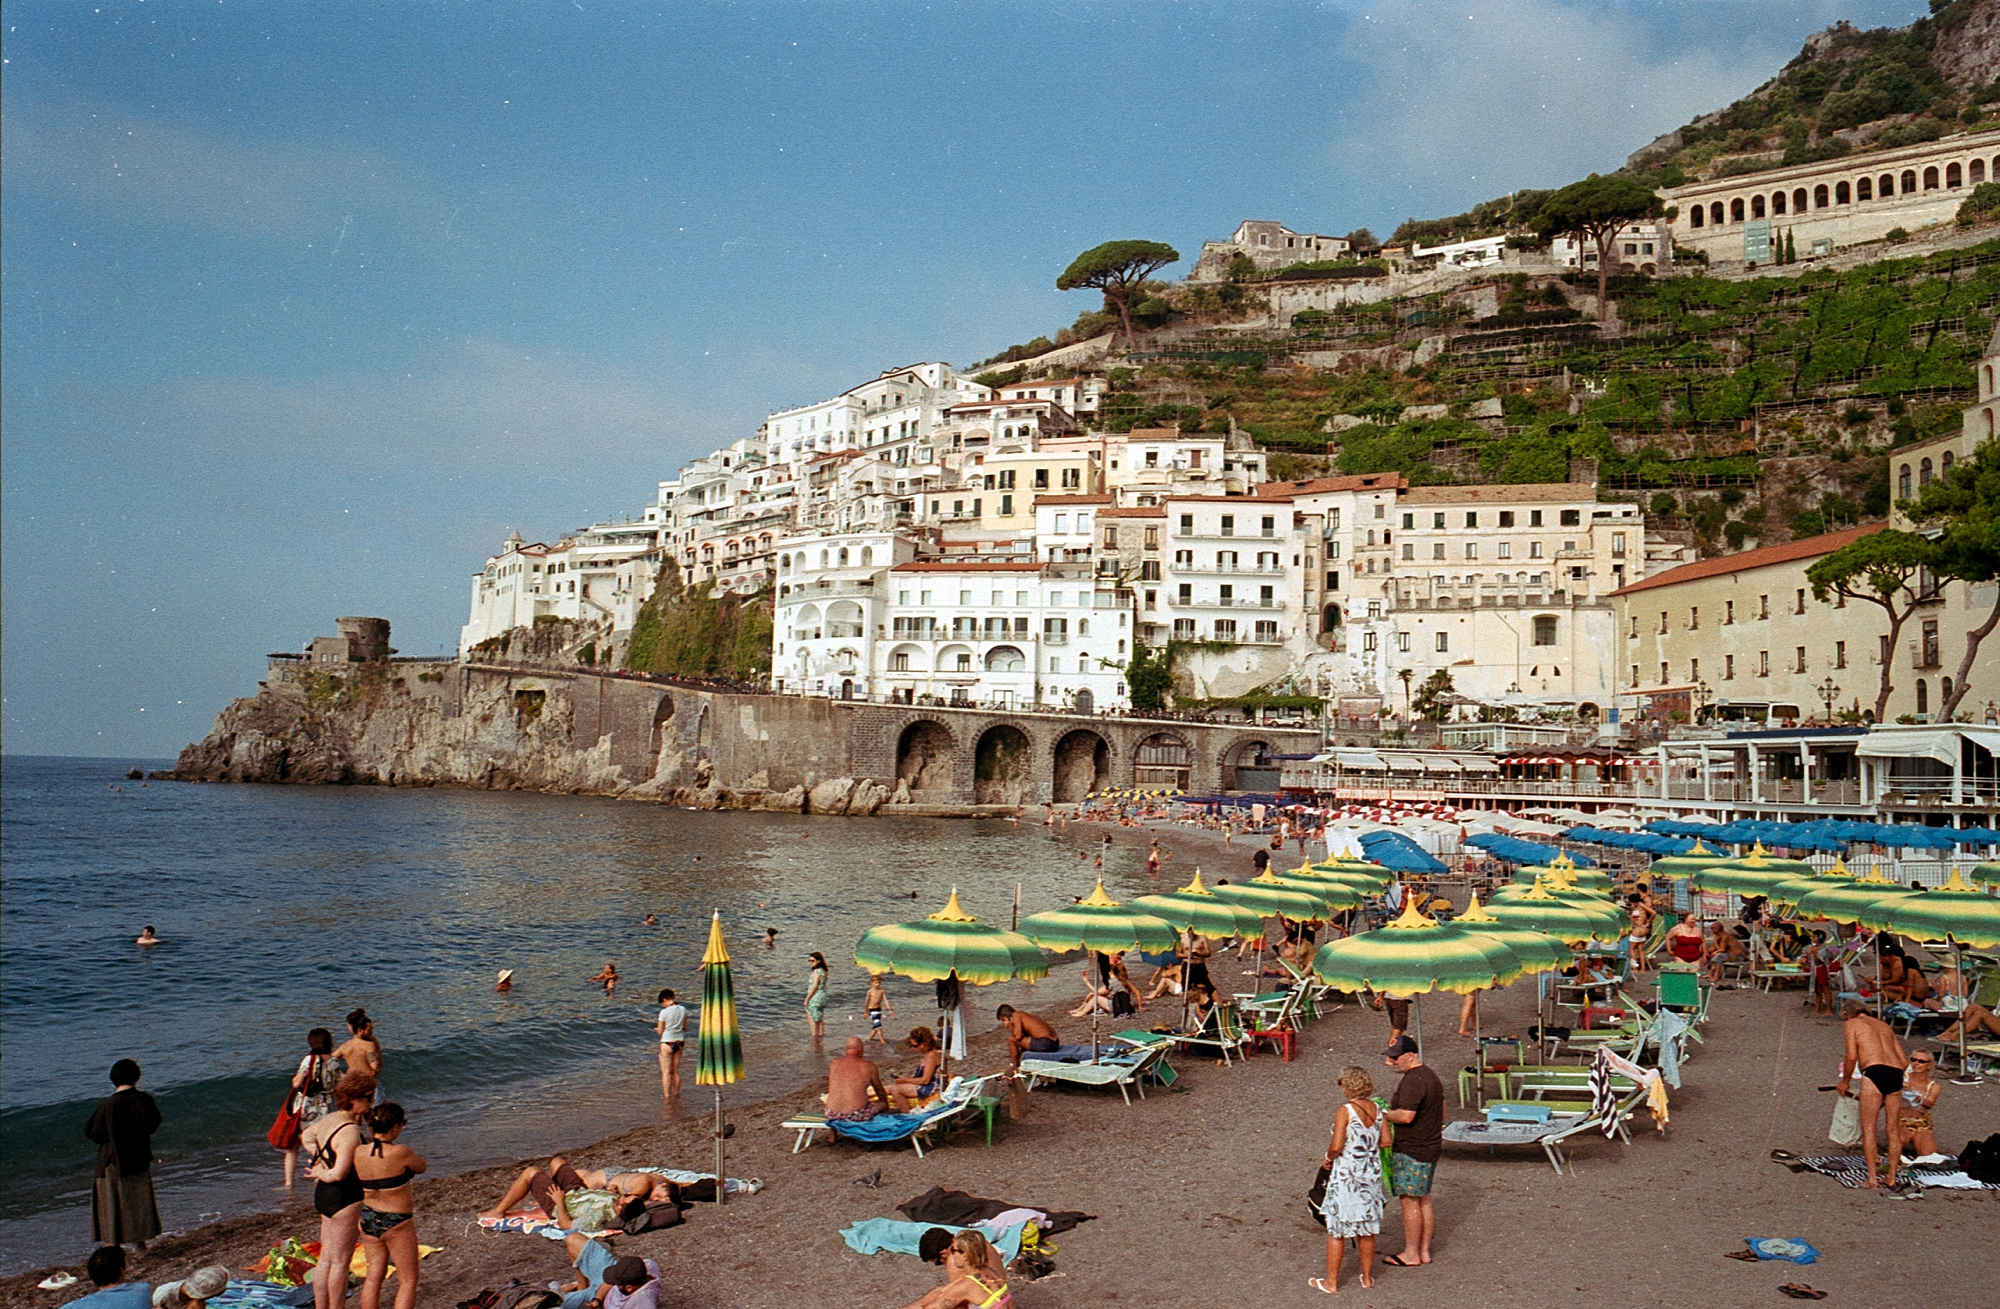 Film photo of the Amalfi Coast in Italy